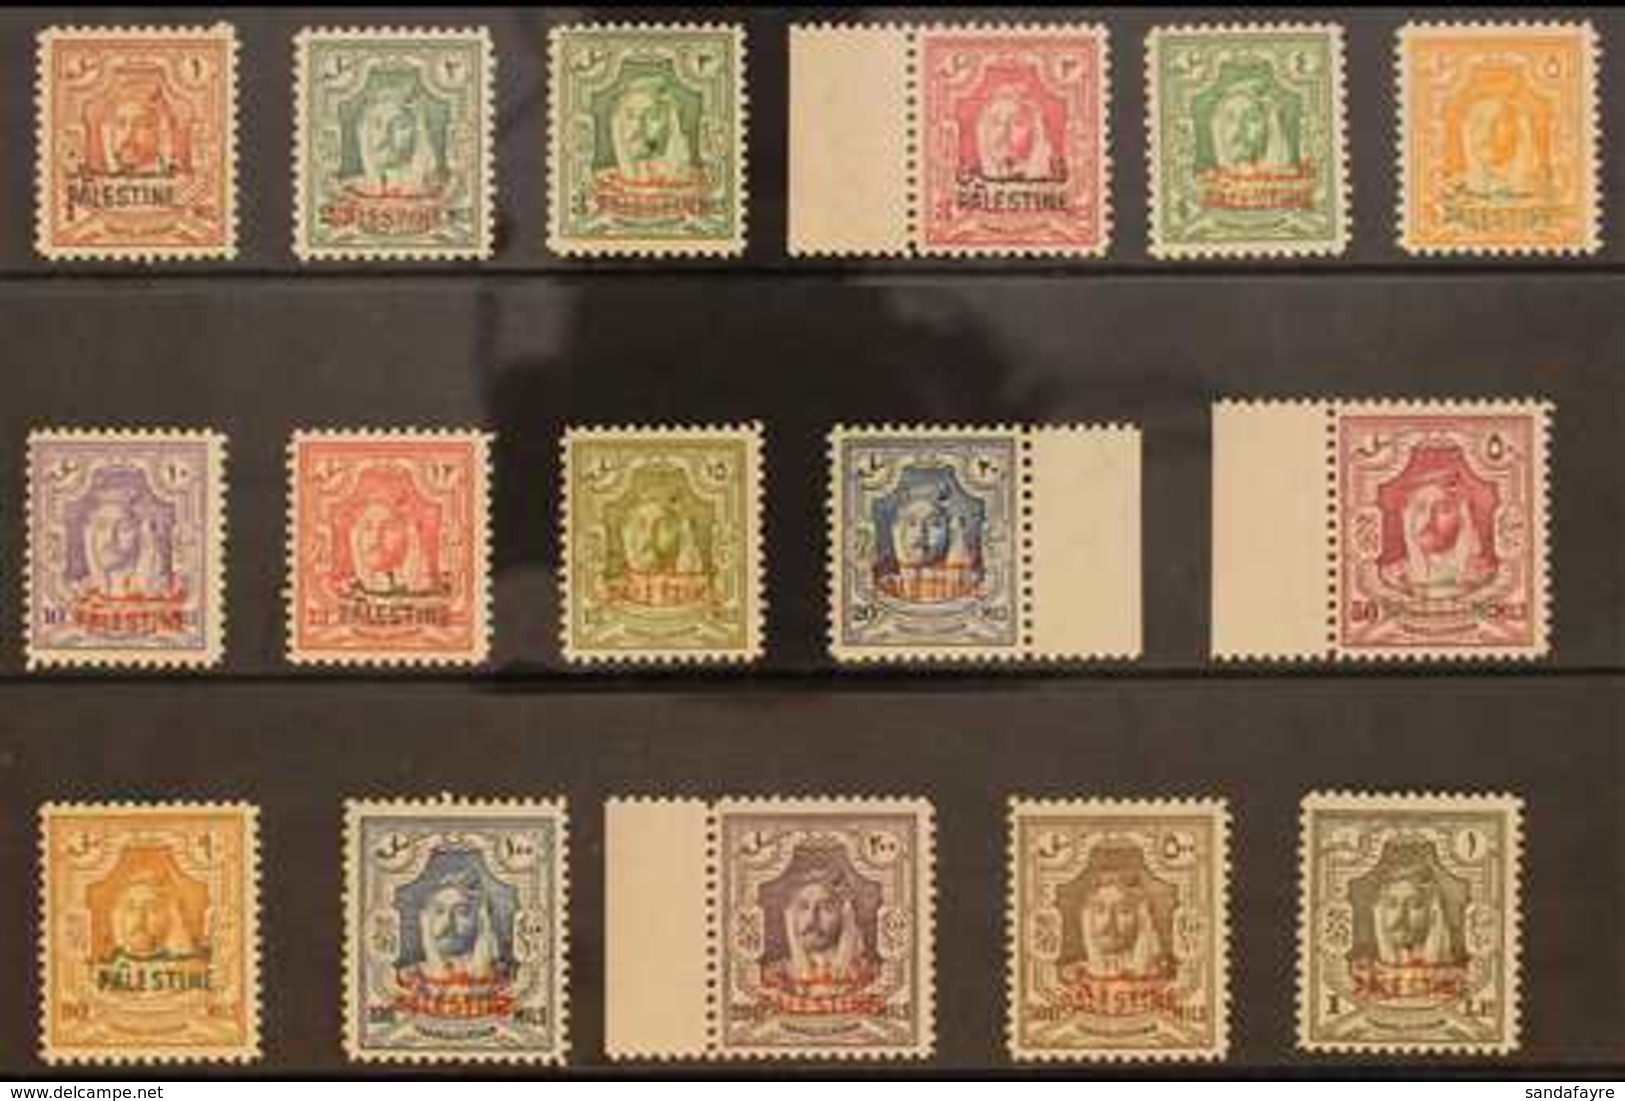 OCCUPATION OF PALESTINE 1948 Jordan Stamps Opt'd "PALESTINE", SG P1/16, Very Fine, Lightly Hinged Mint (16 Stamps) For M - Jordanien